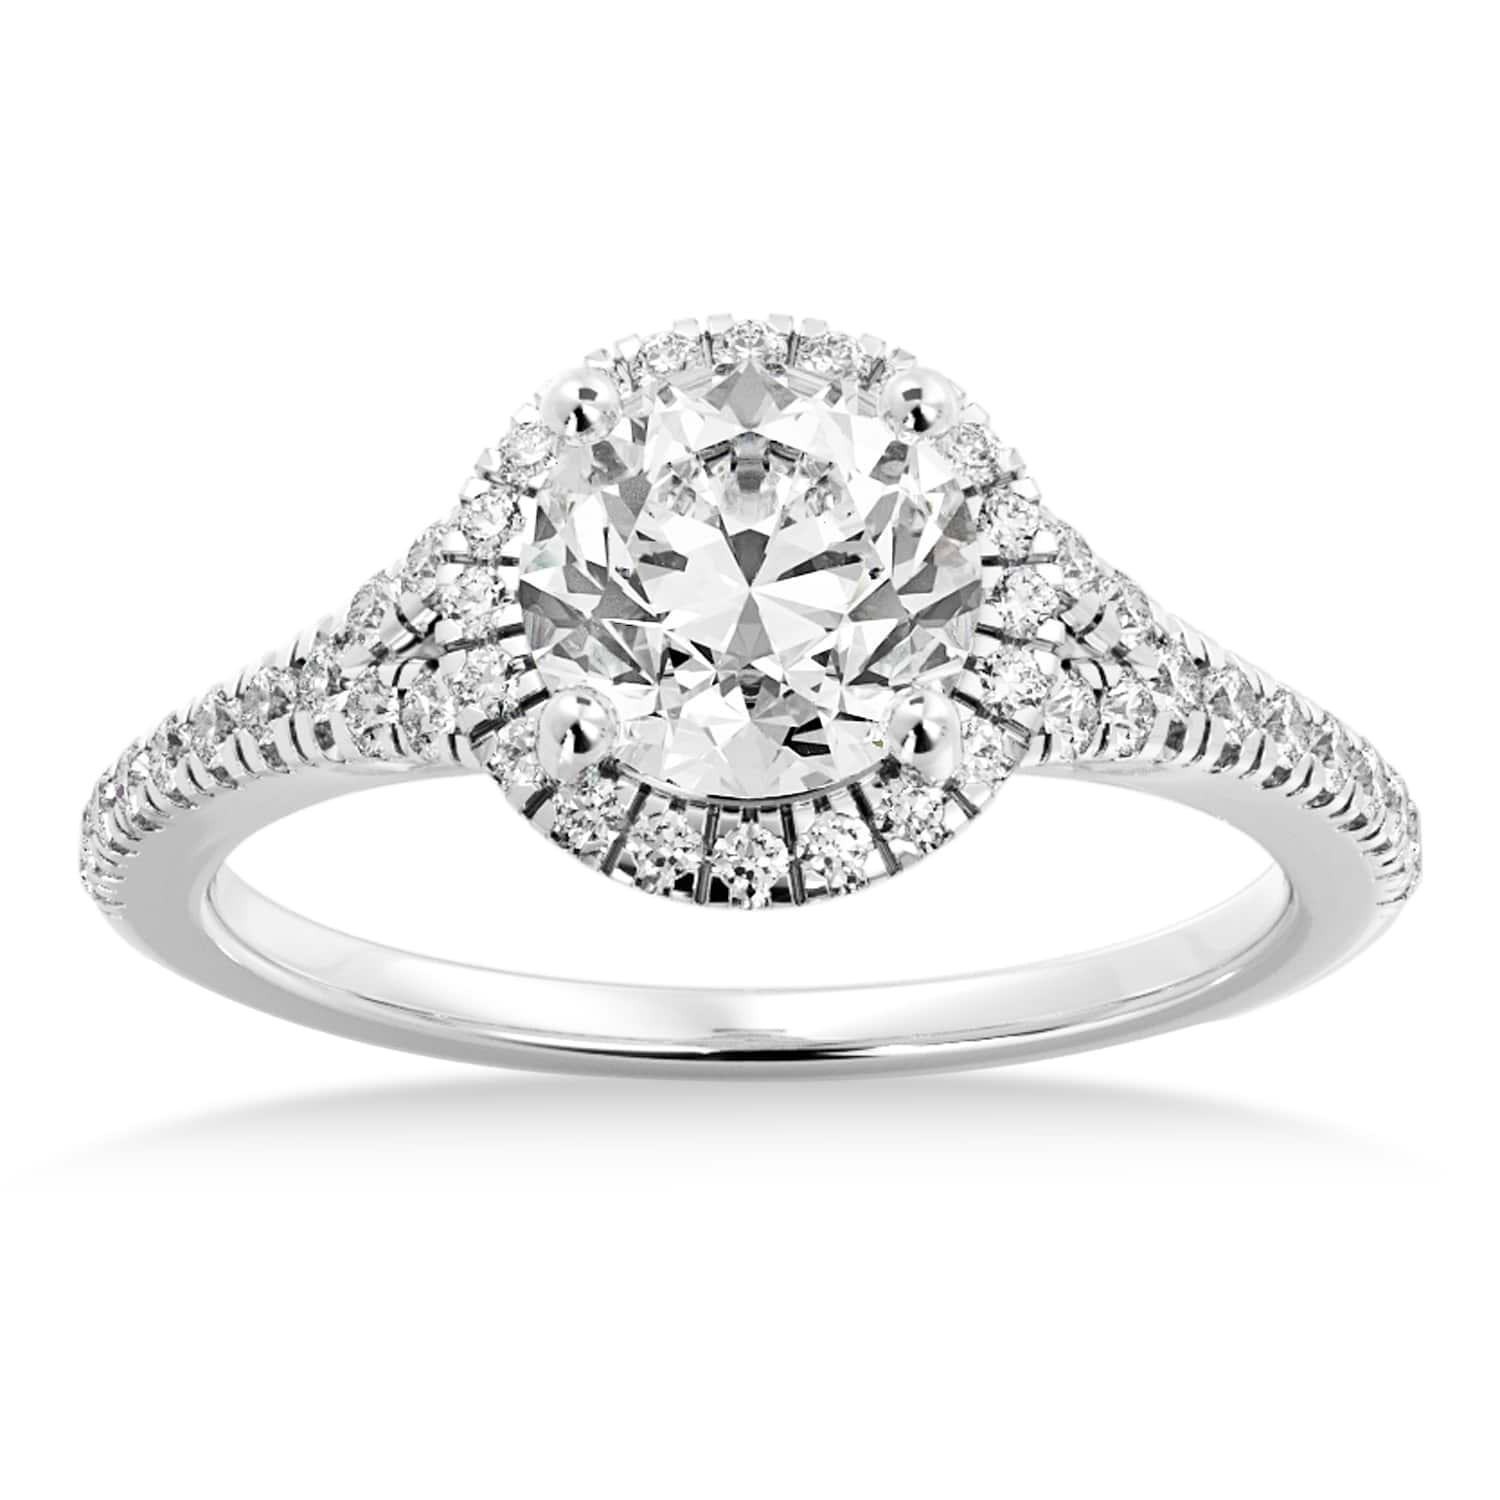 Diamond  Halo Engagement Ring 14k White Gold (0.40ct)